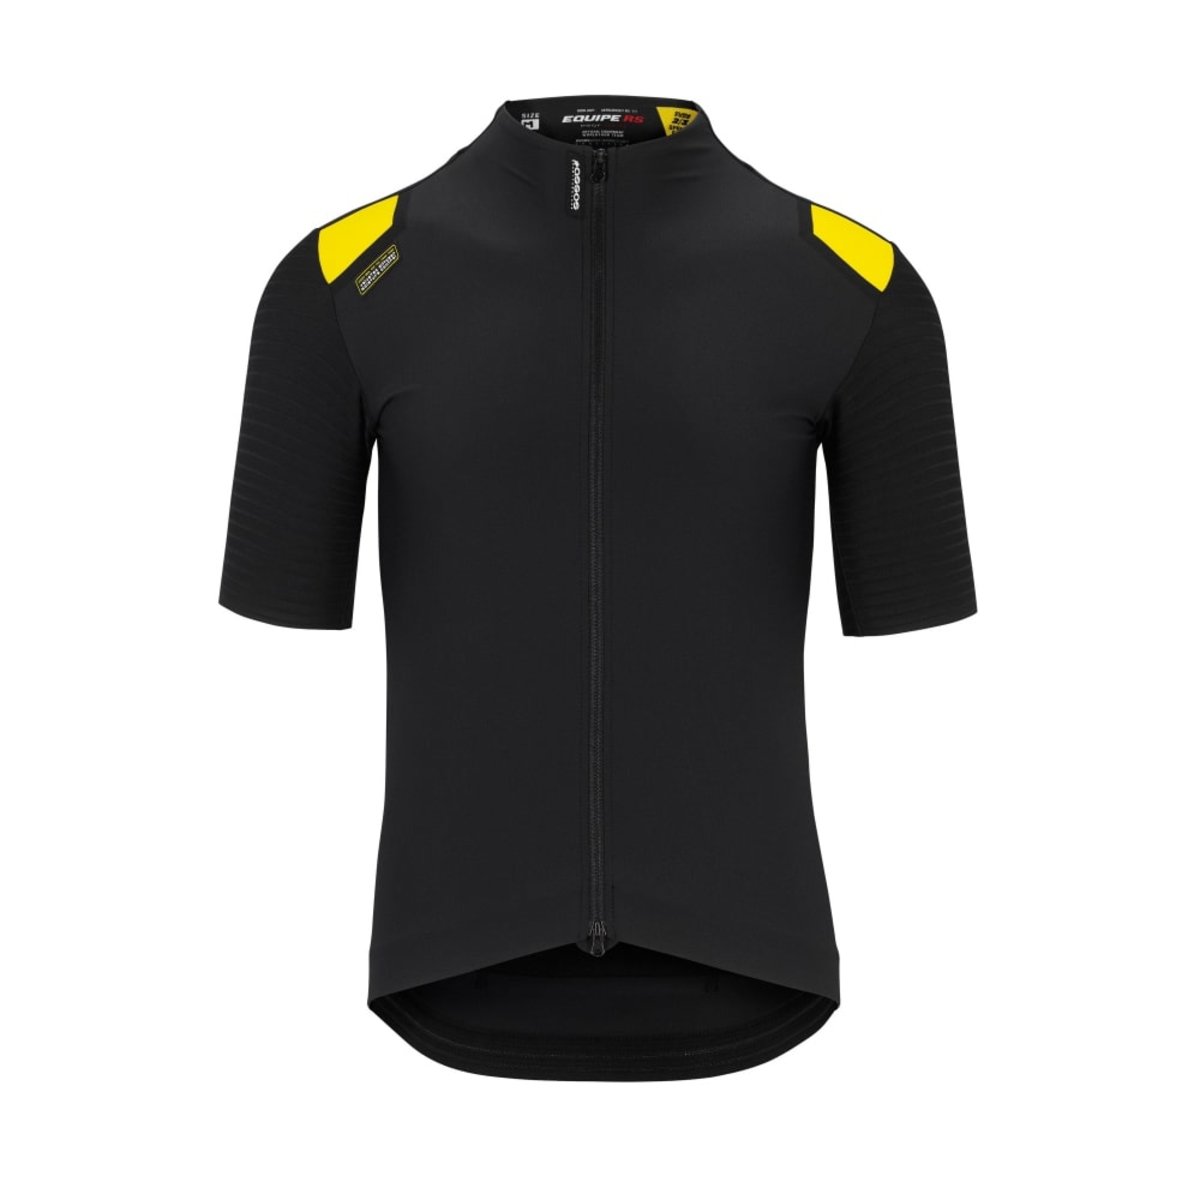 Джерси ASSOS Equipe RS Spring Fall Aero SS Jersey Black Series, кор. рукав, мужское, черное с желтым, M